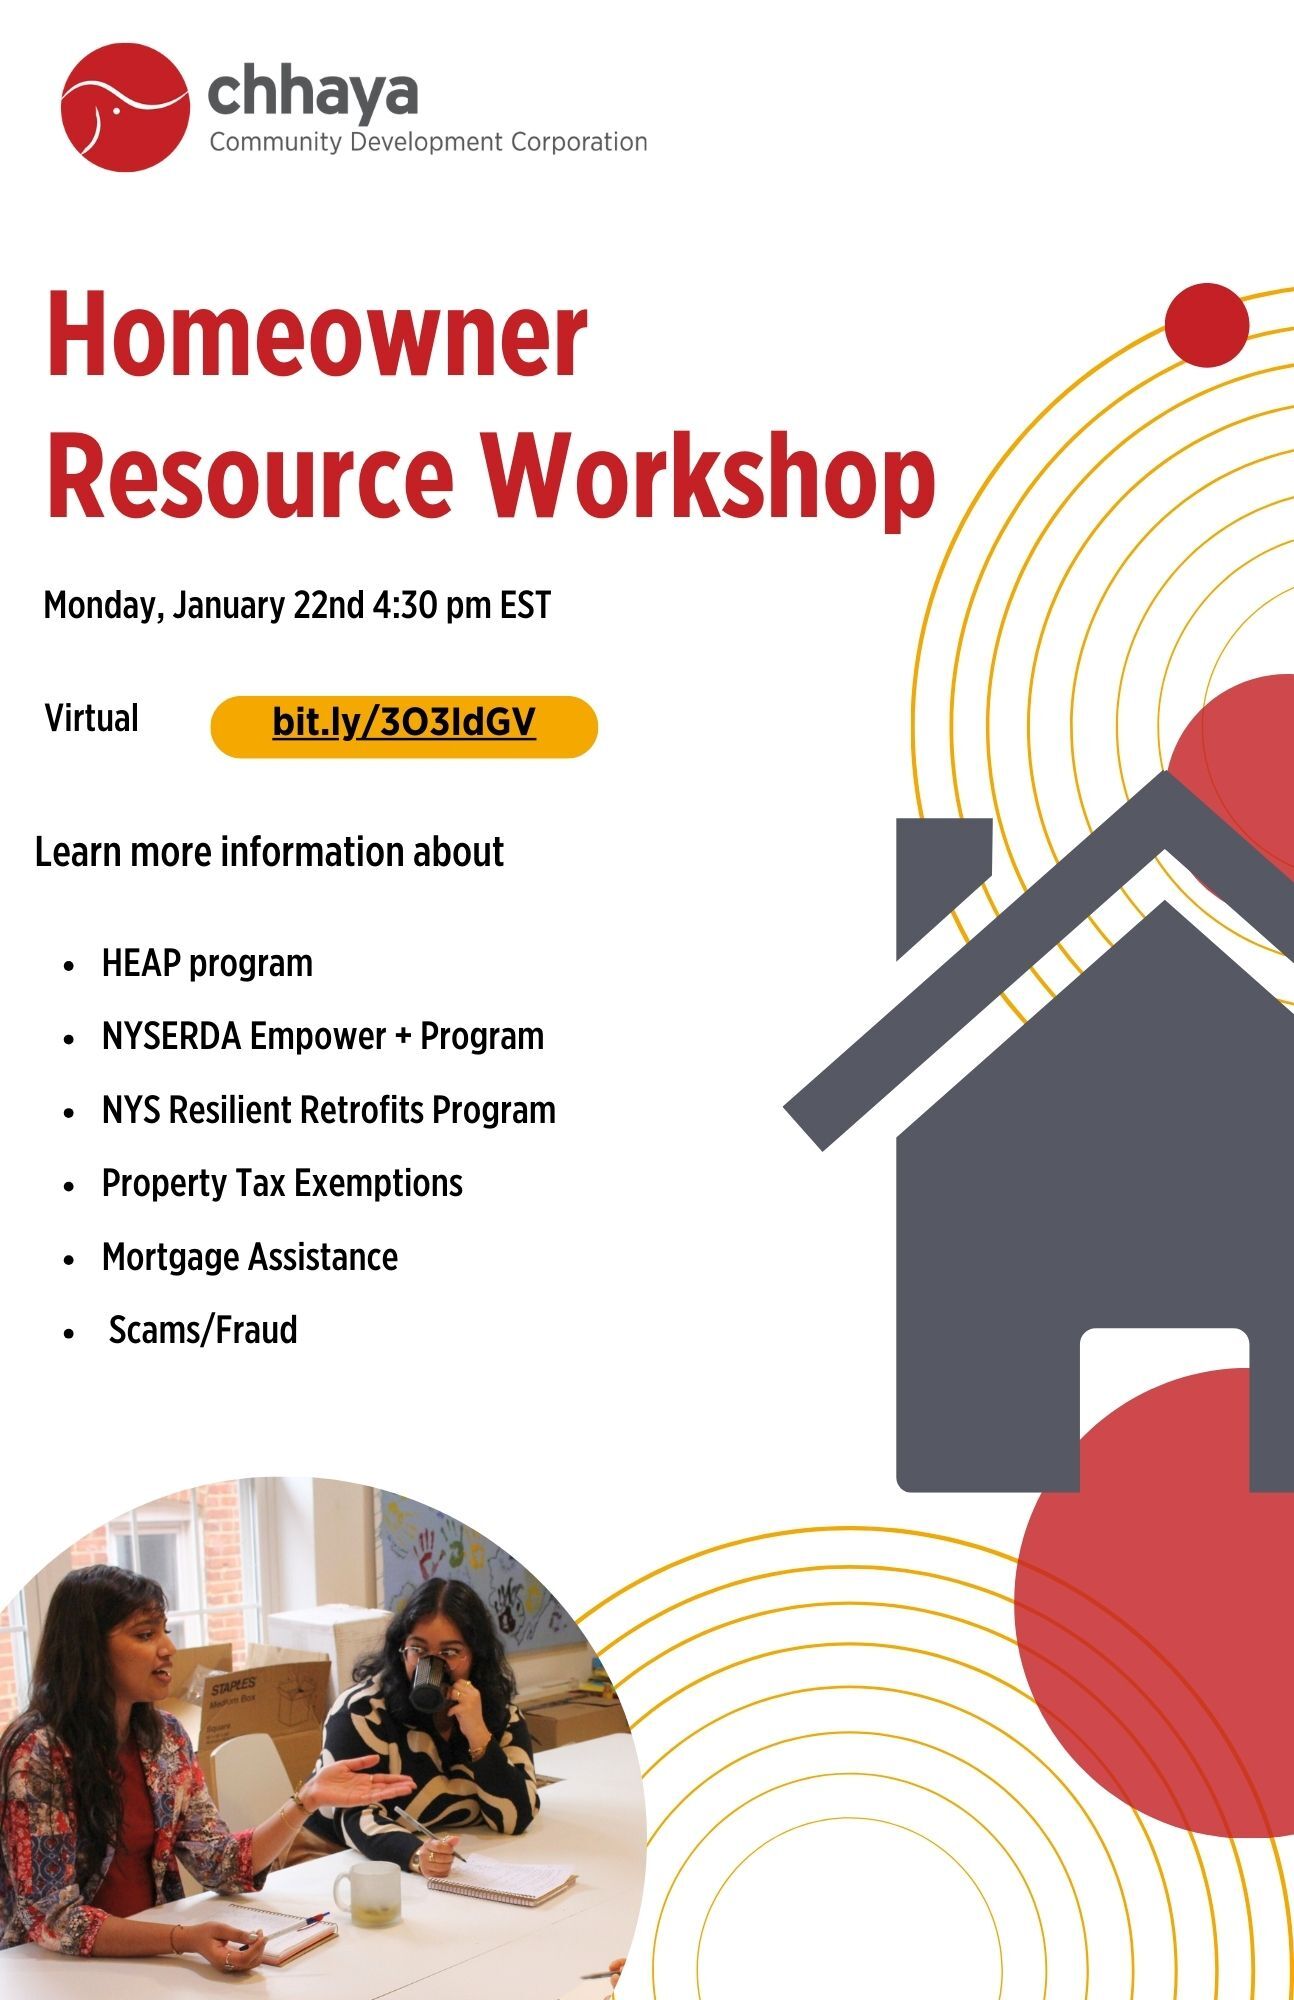 Flyer for Homeowner Resource Workshop at Chhaya